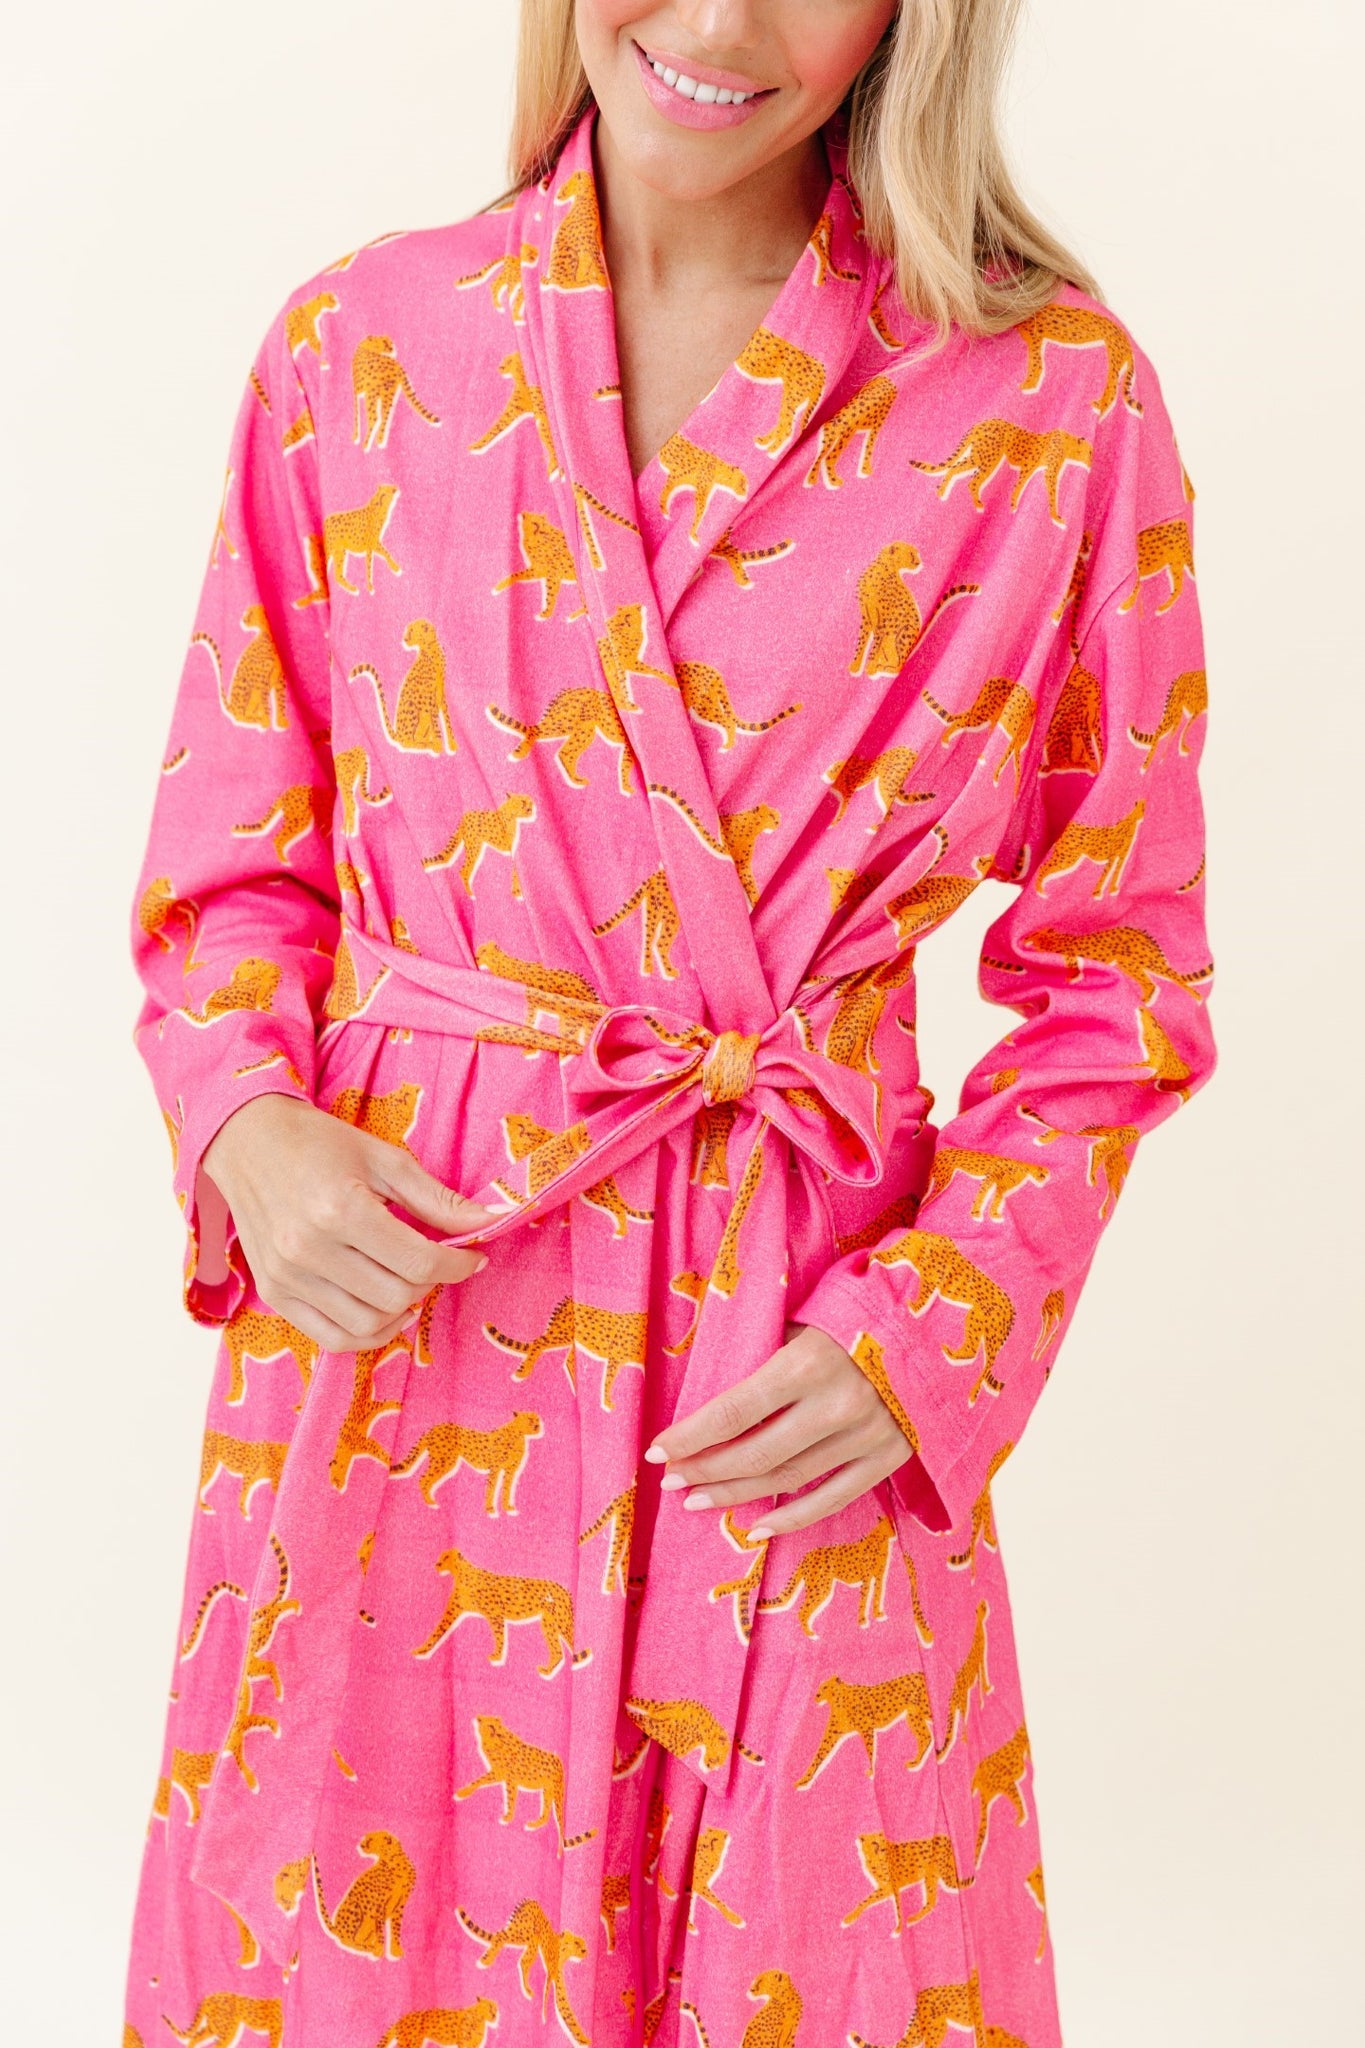 Robe in Pink Cheetah